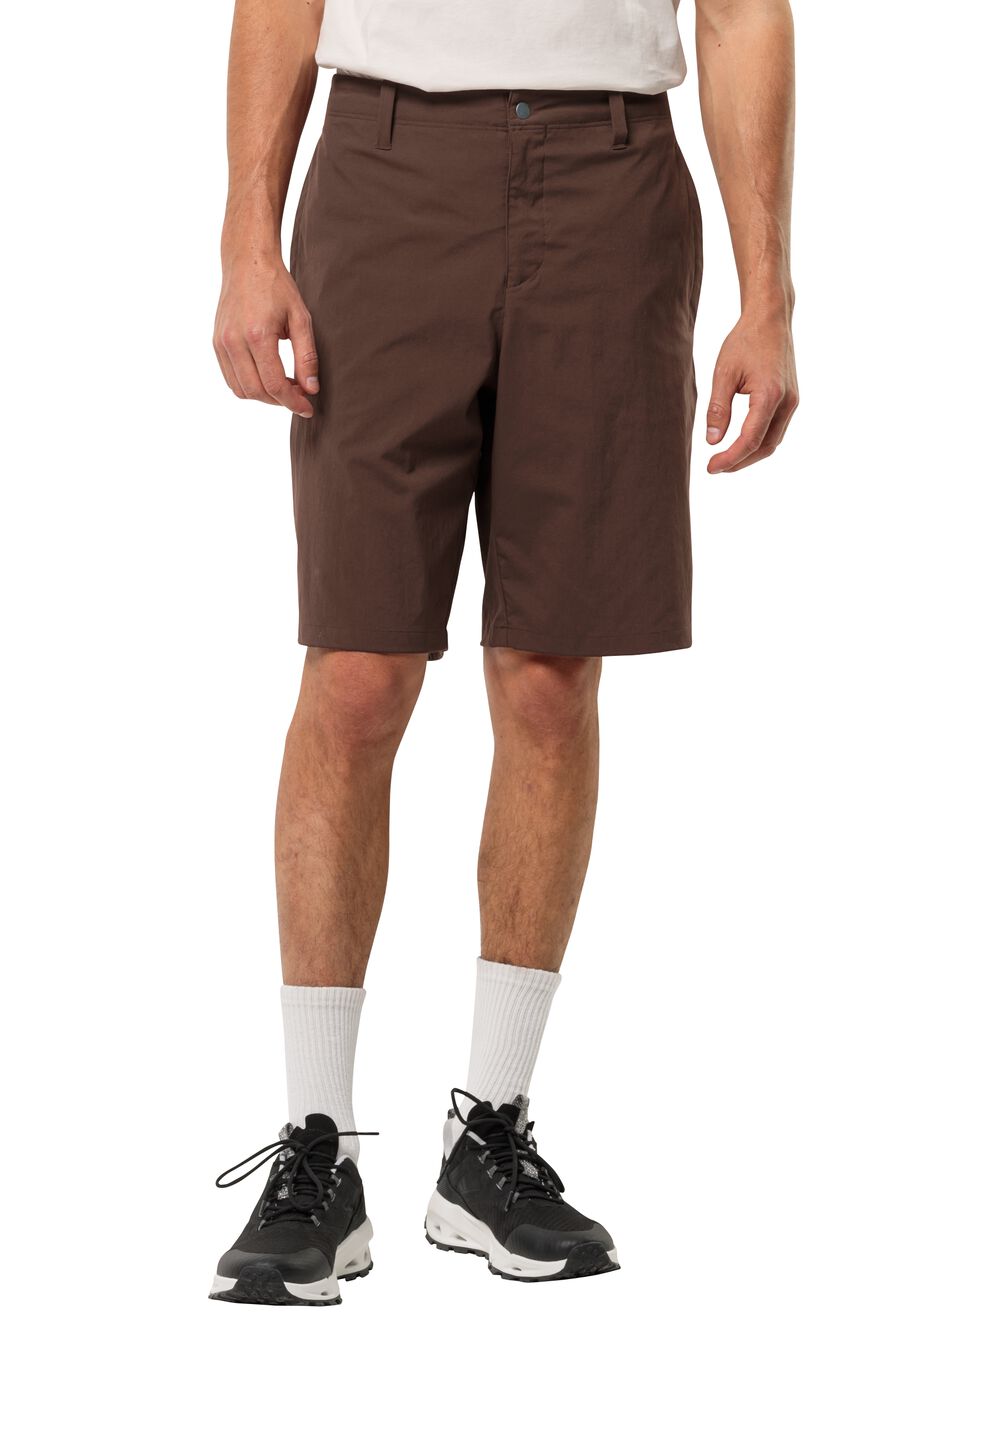 Jack Wolfskin Desert Shorts Men Korte broek Heren 52 bruin dark mahogany